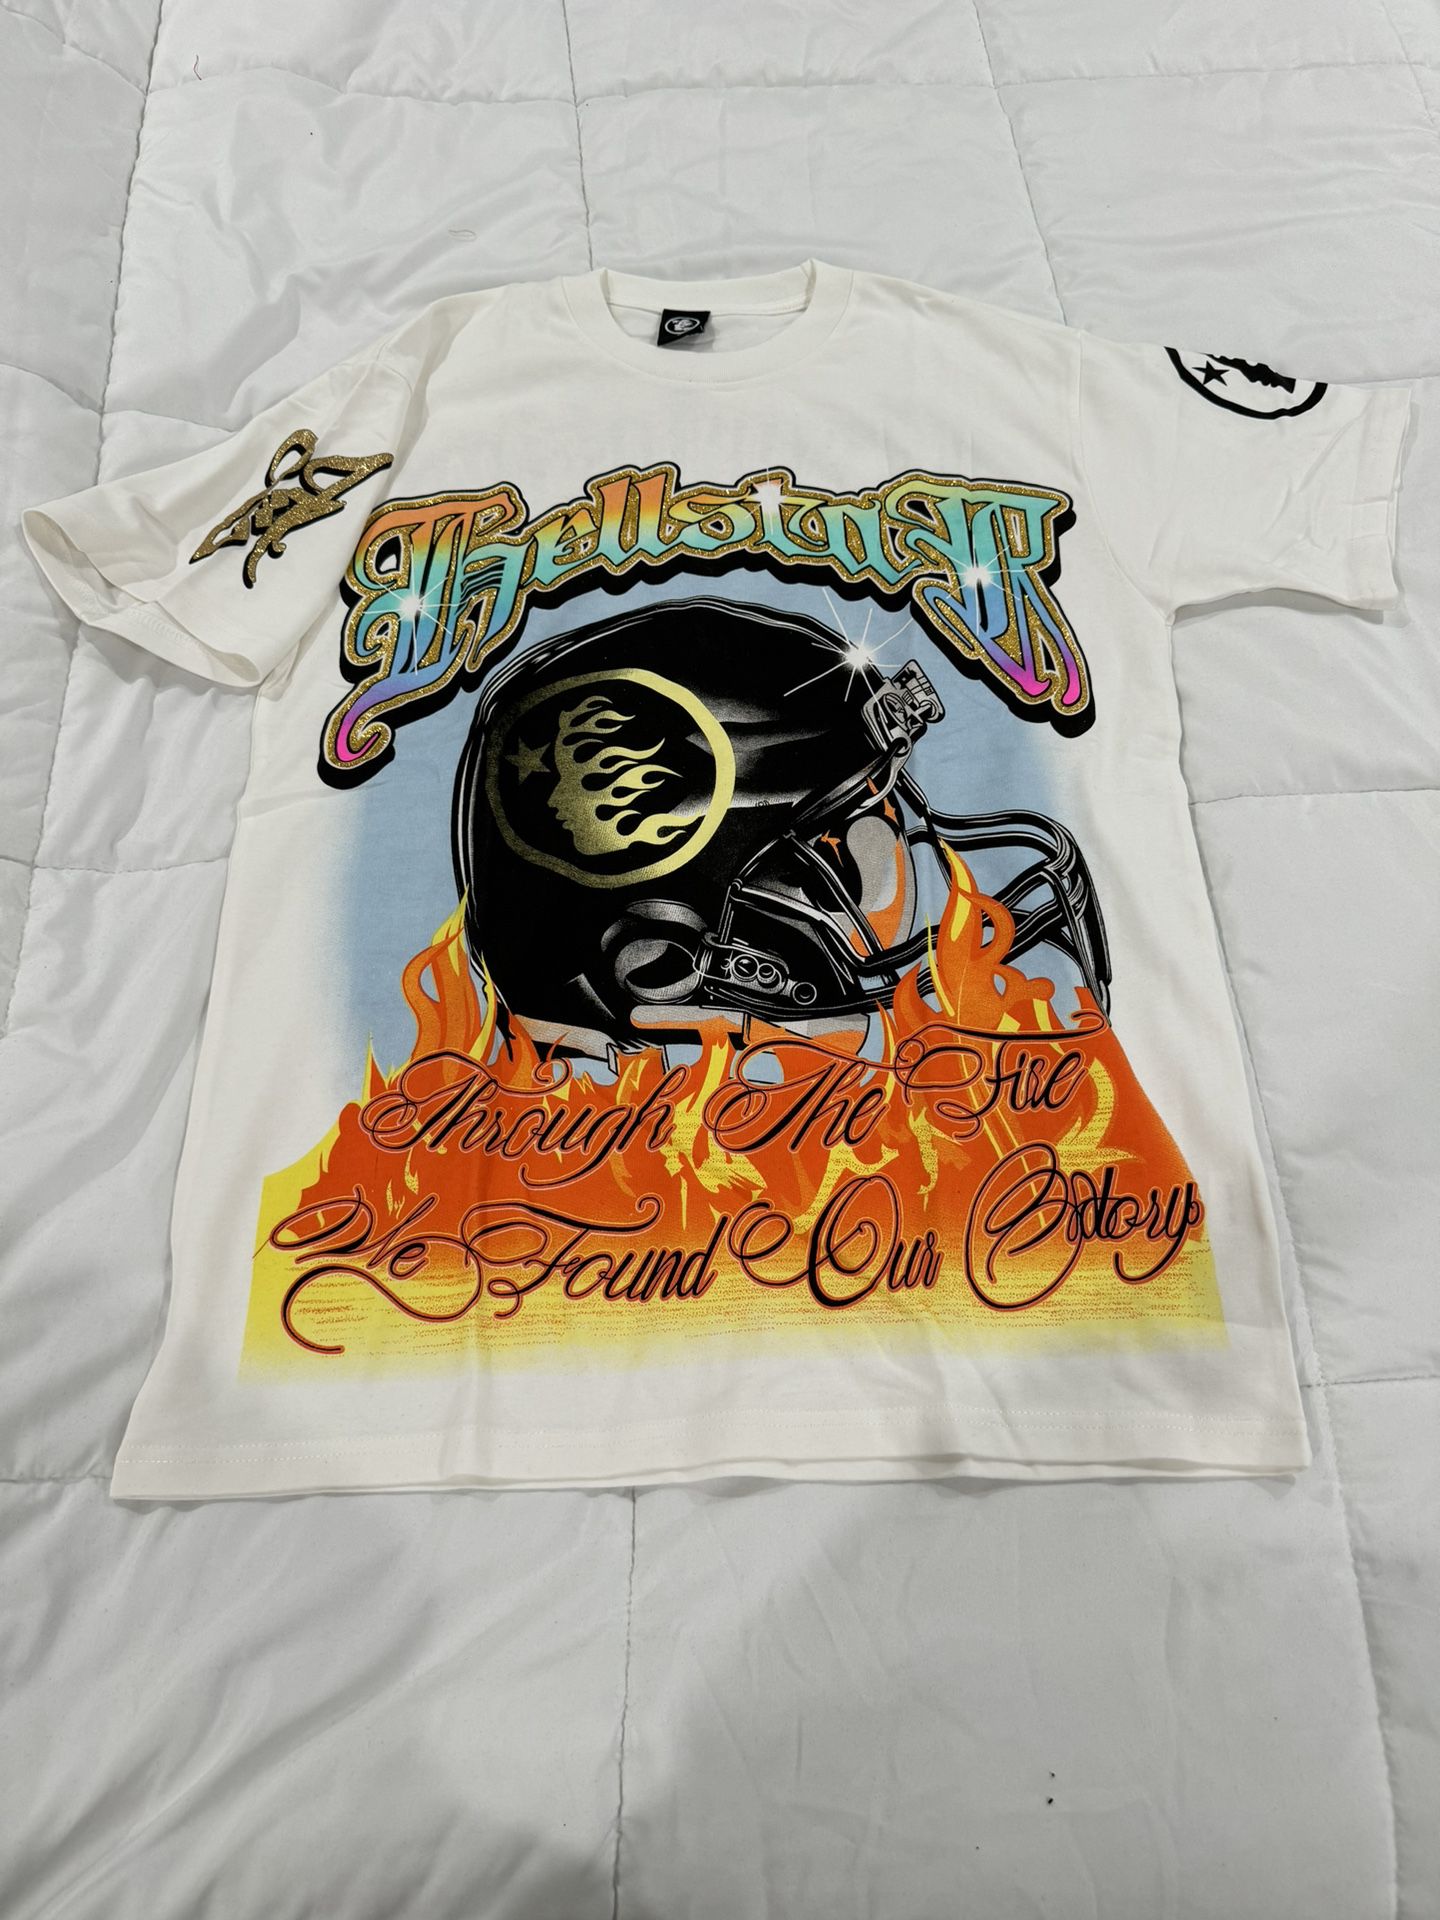 Hellstar Shirt 